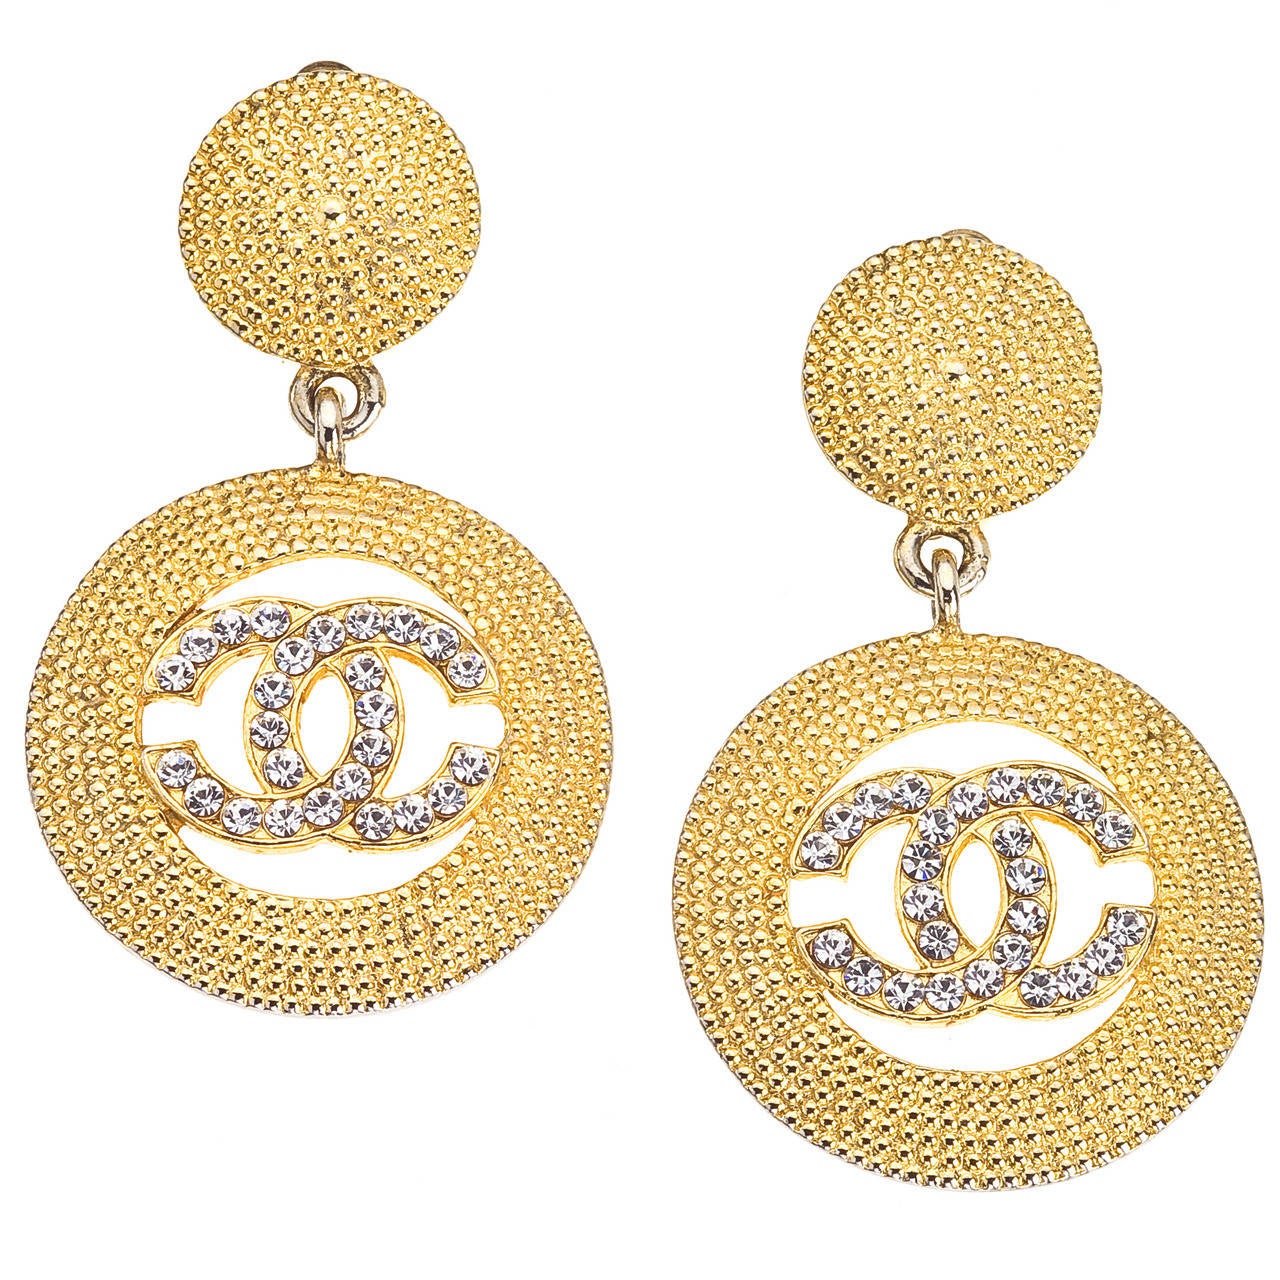 Chanel Dangling Earrings with Rhinestones